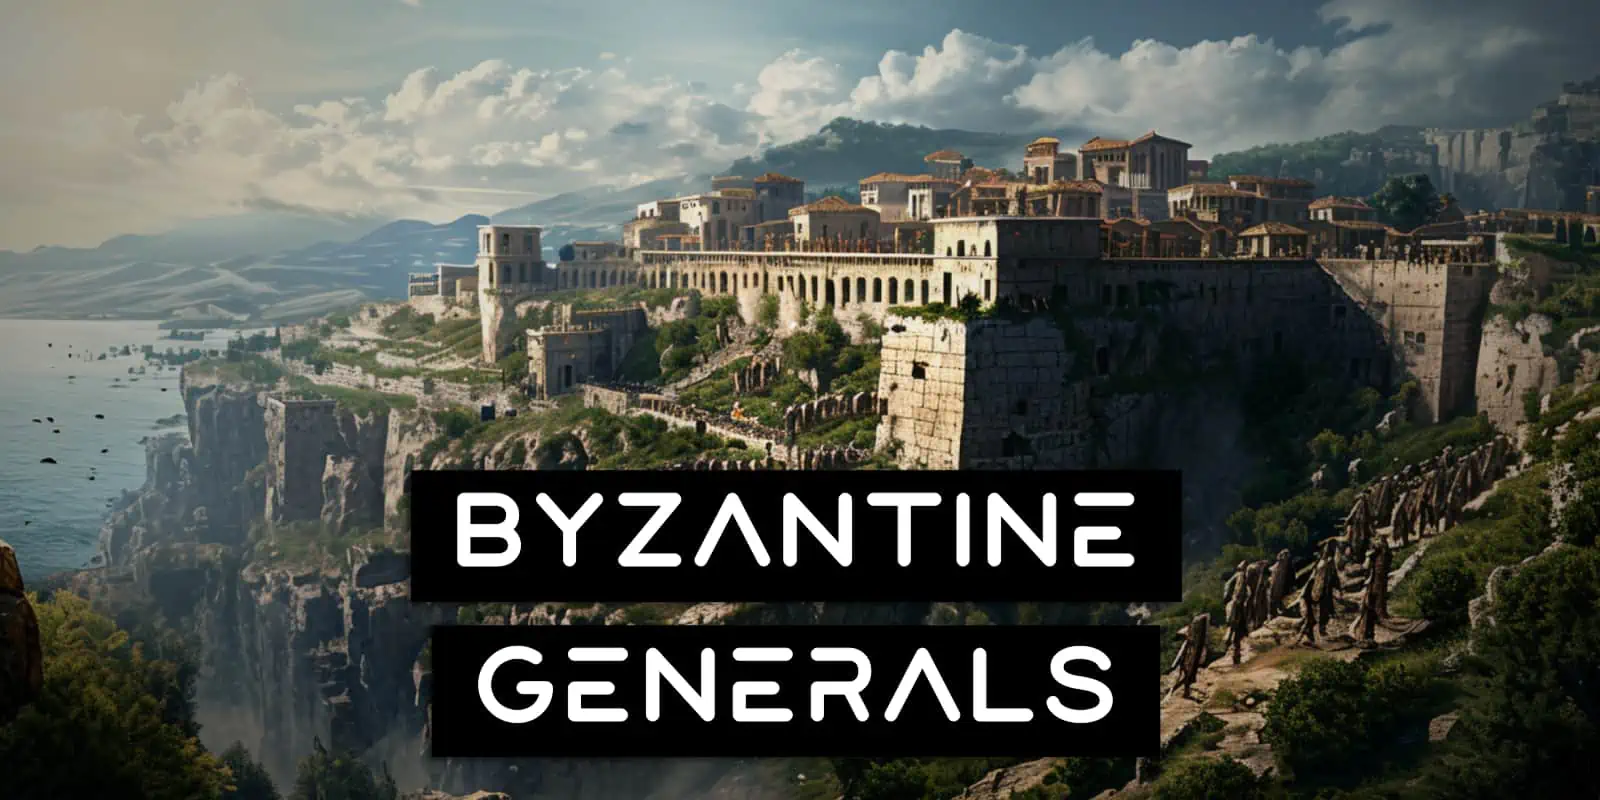 Byzantine Generals Problem